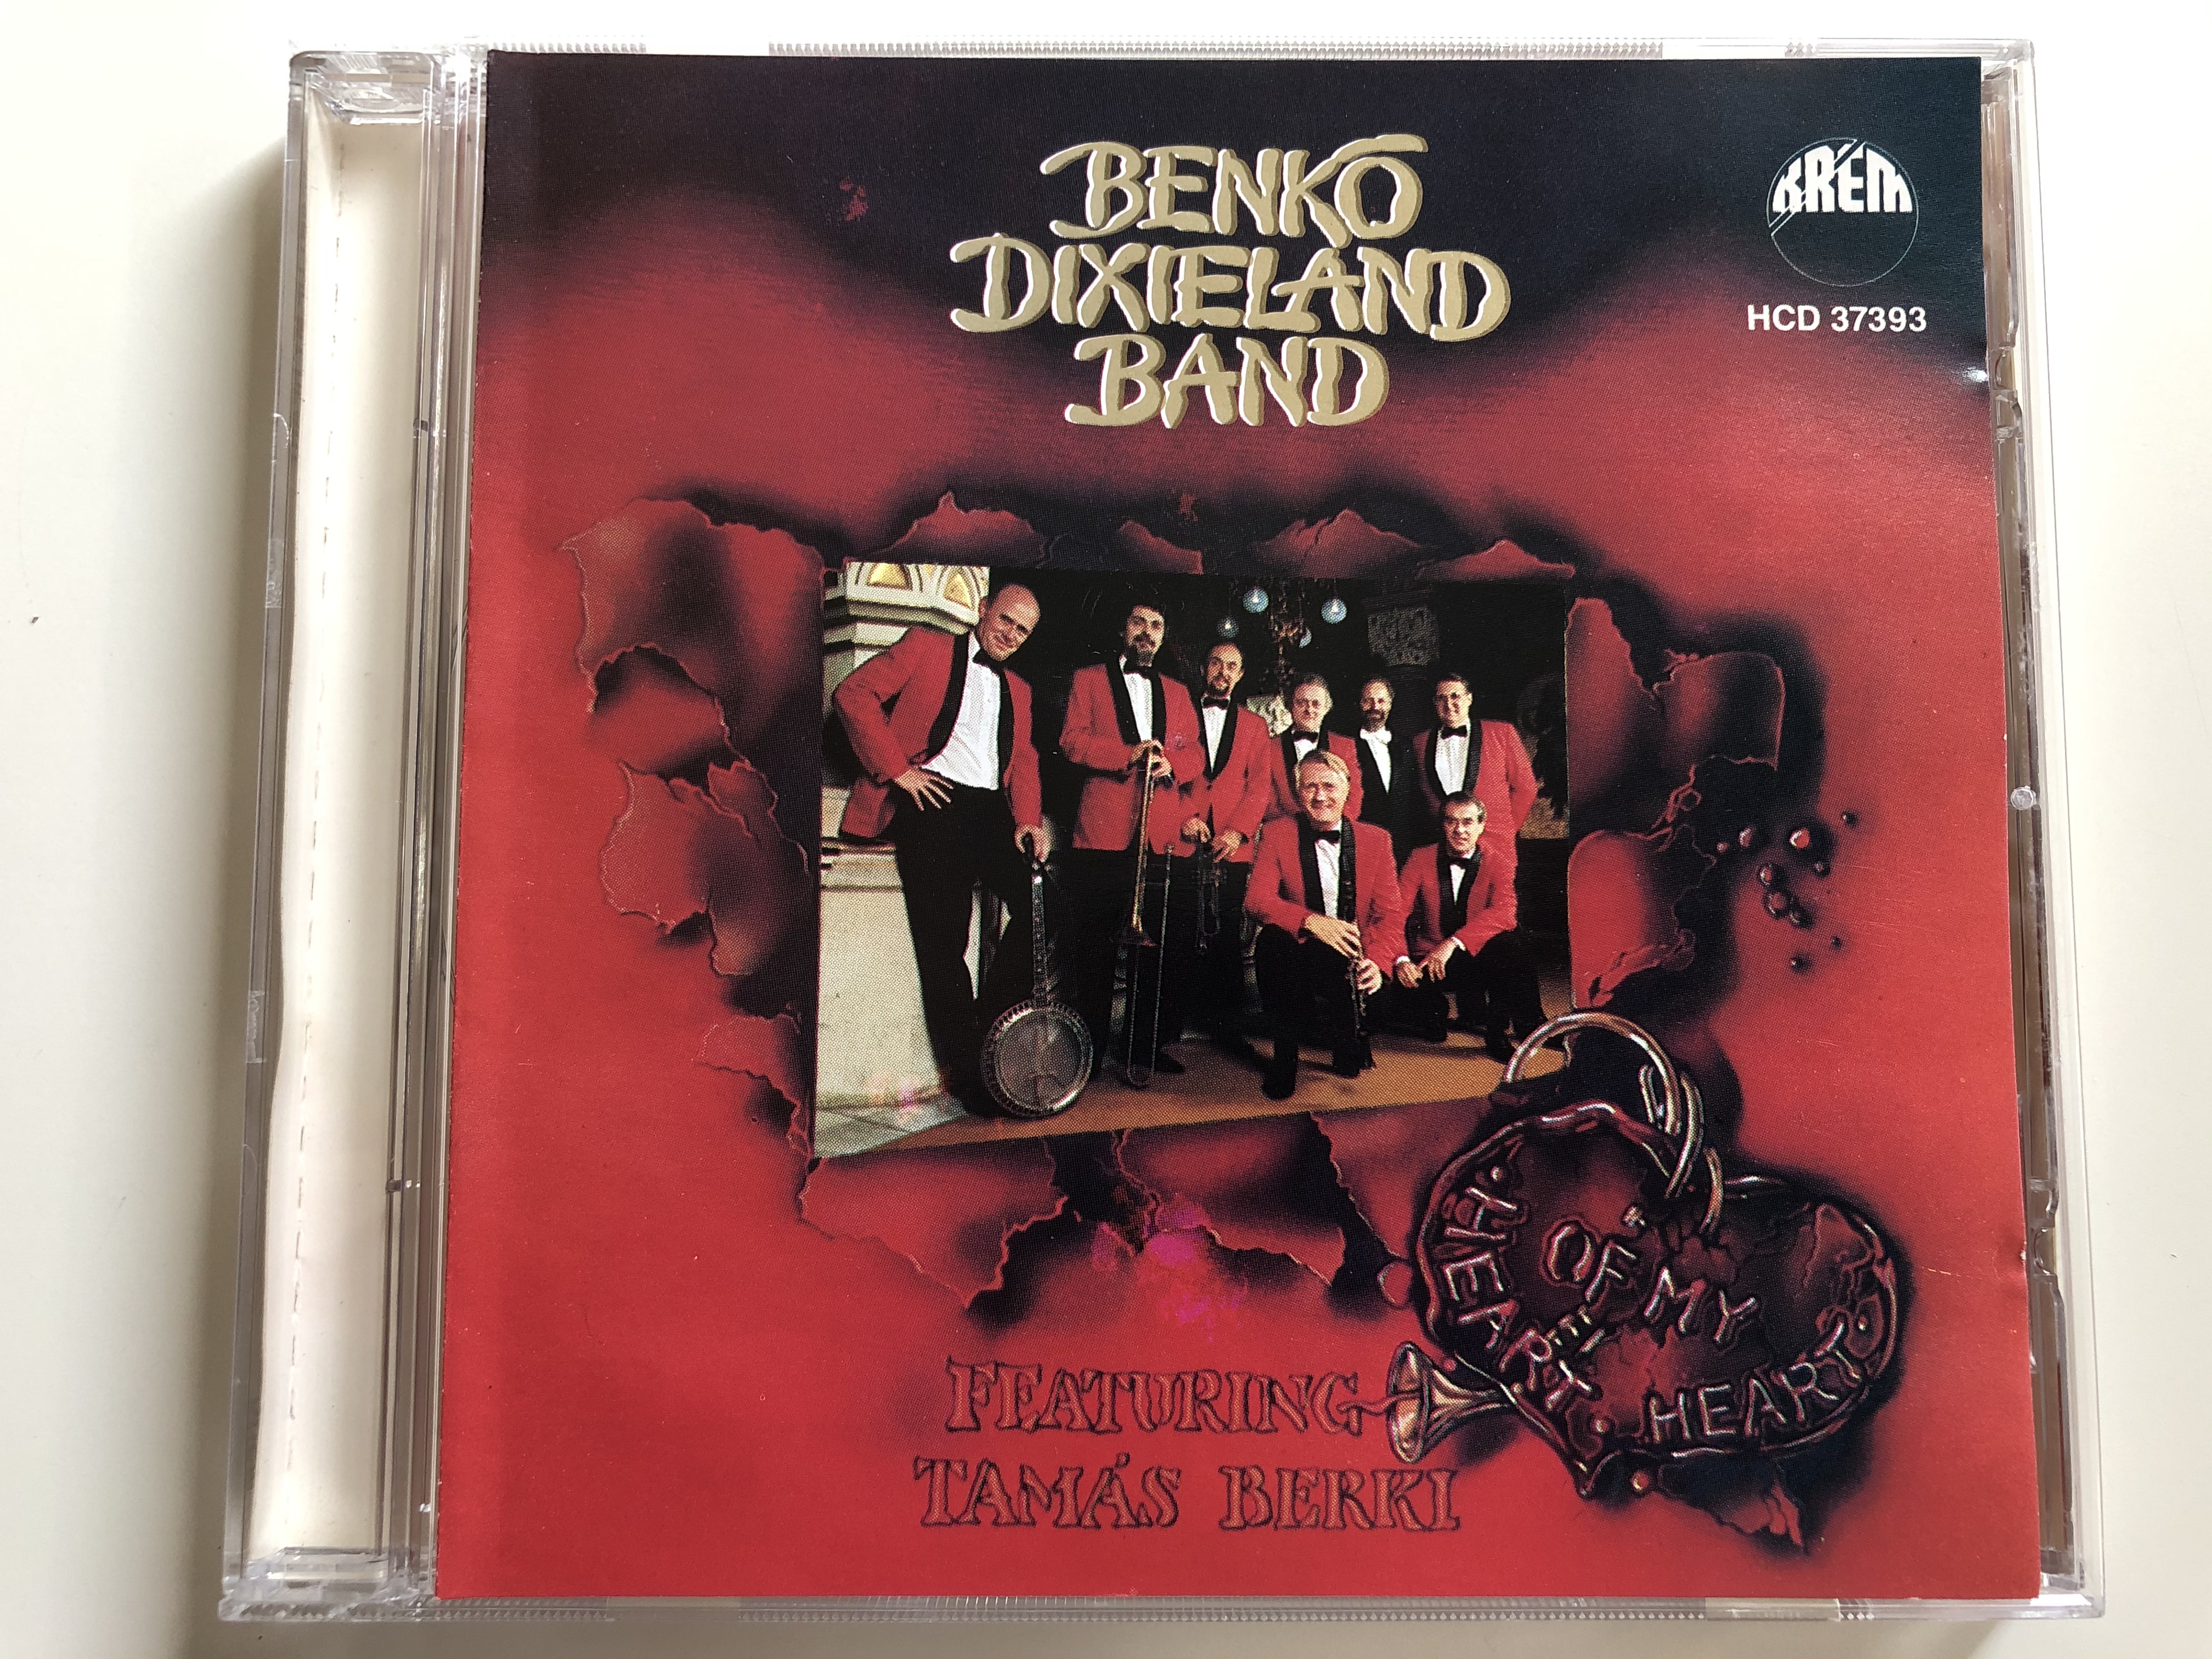 benk-dixieland-band-heart-of-my-heart-featuring-tamas-berki-krem-audio-cd-1993-hcd-37393-1-.jpg